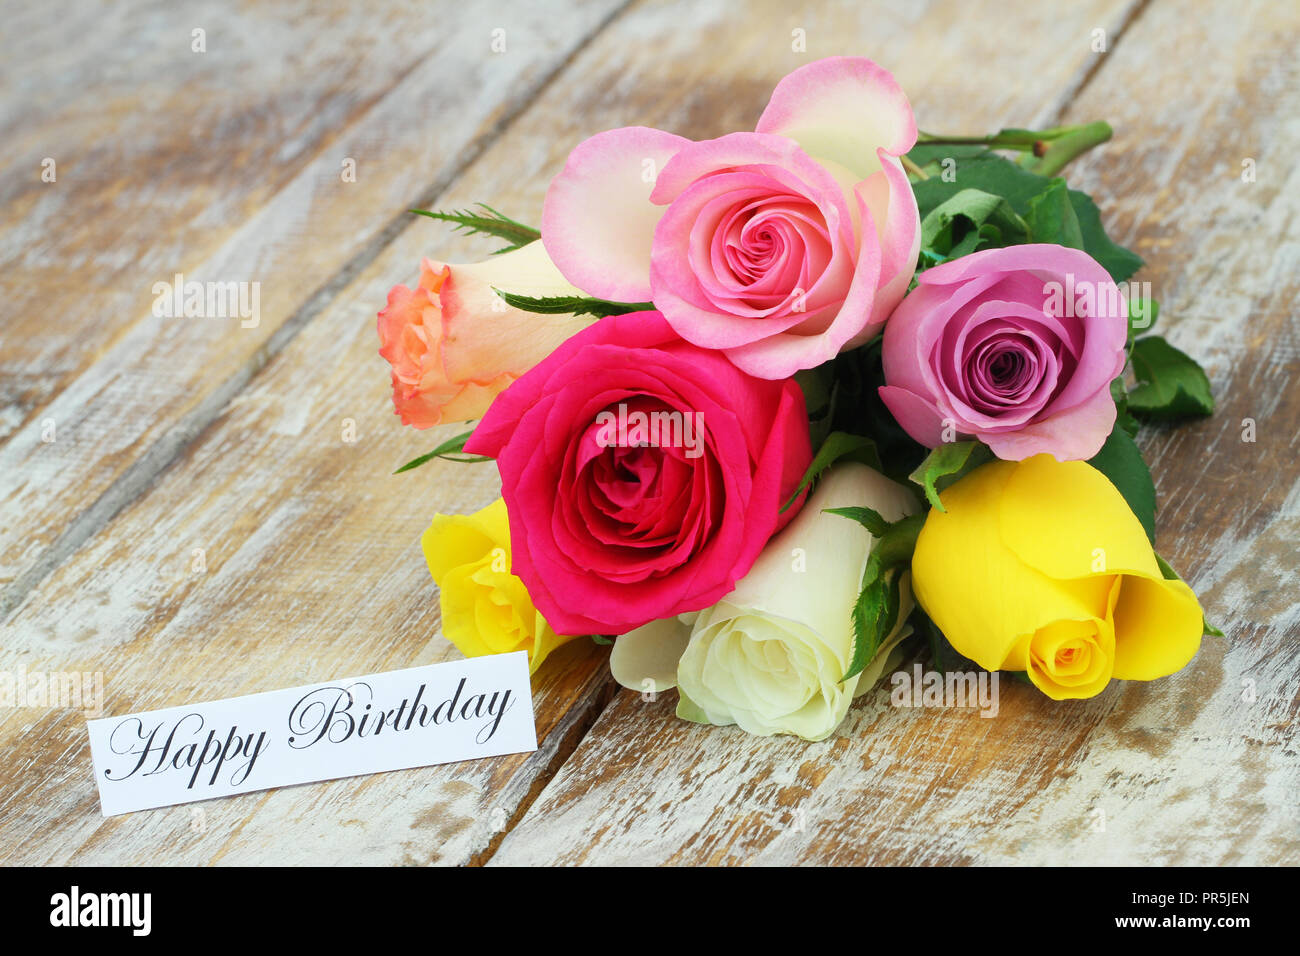 Happy Birthday Karte mit bunten Blumenstrauß aus Rosen auf rustikalem Holz Stockfoto